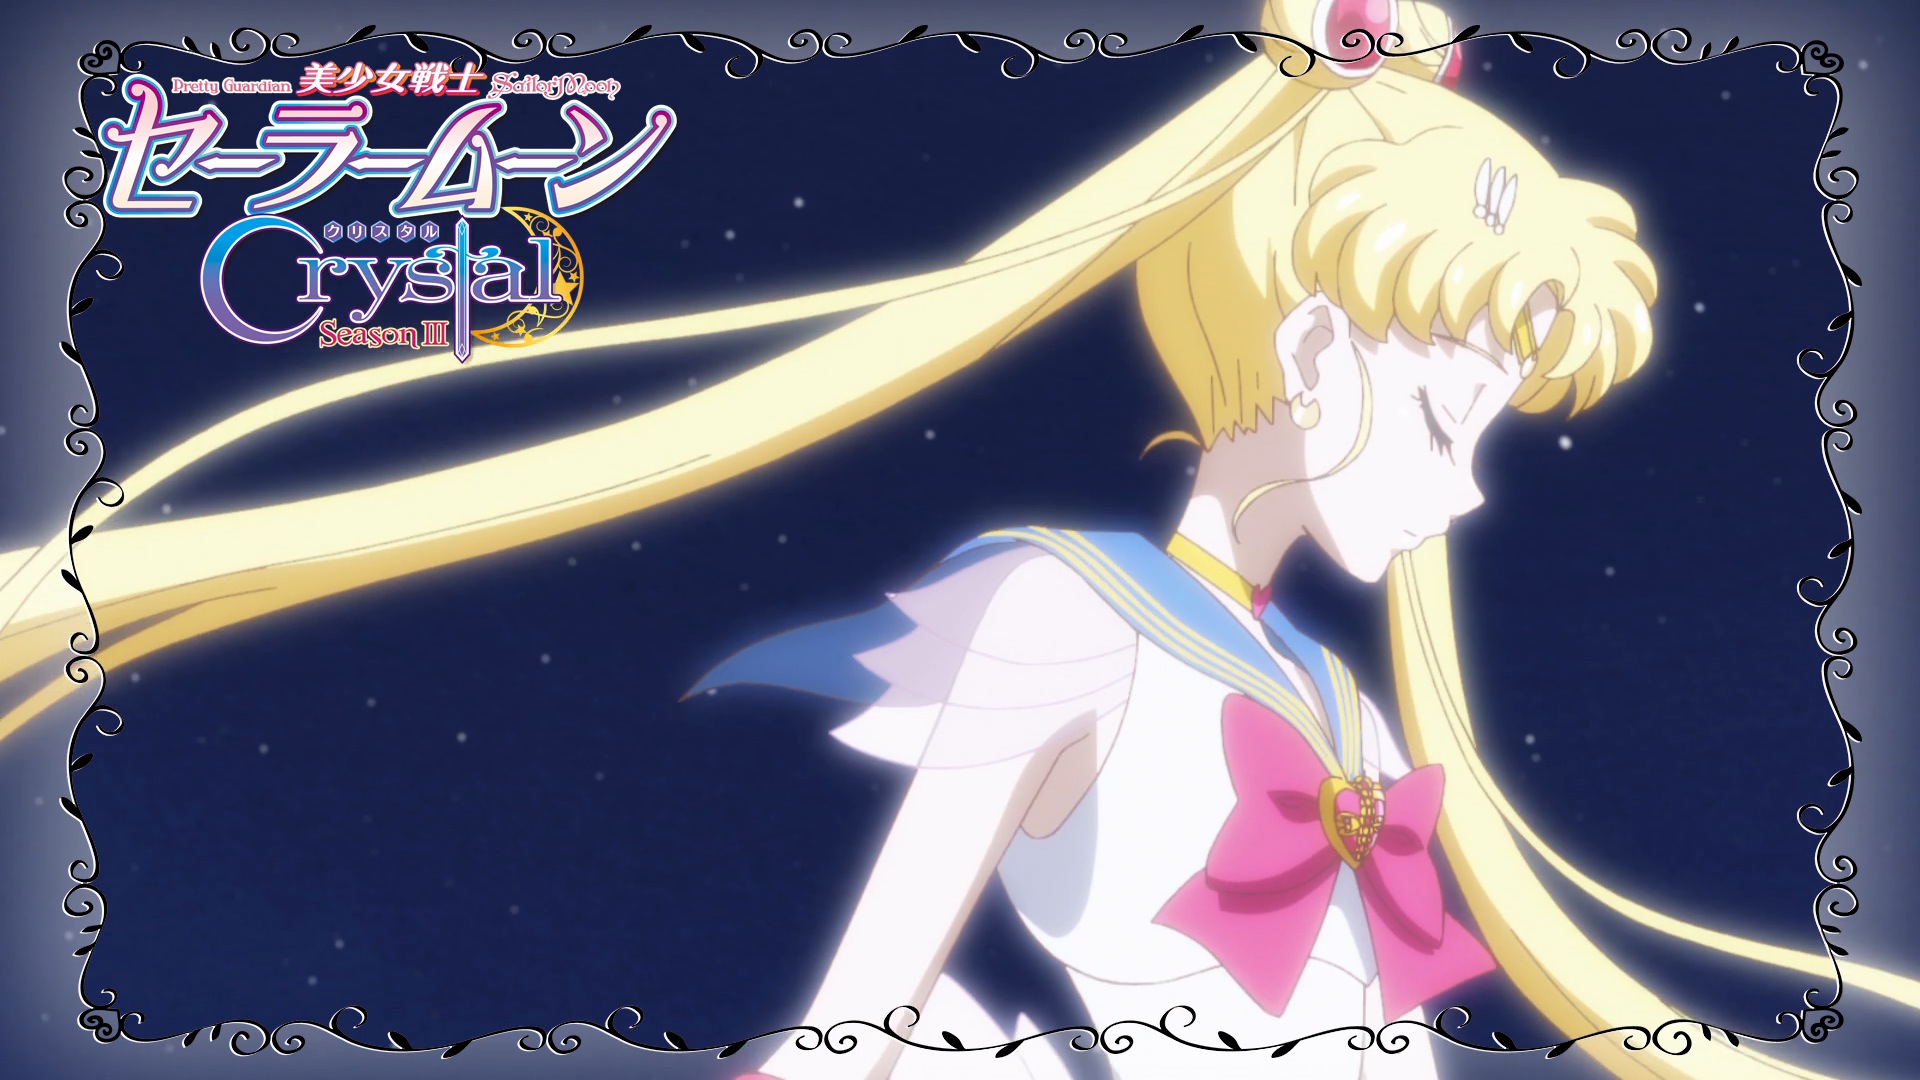 Sailor moon world loses virginity